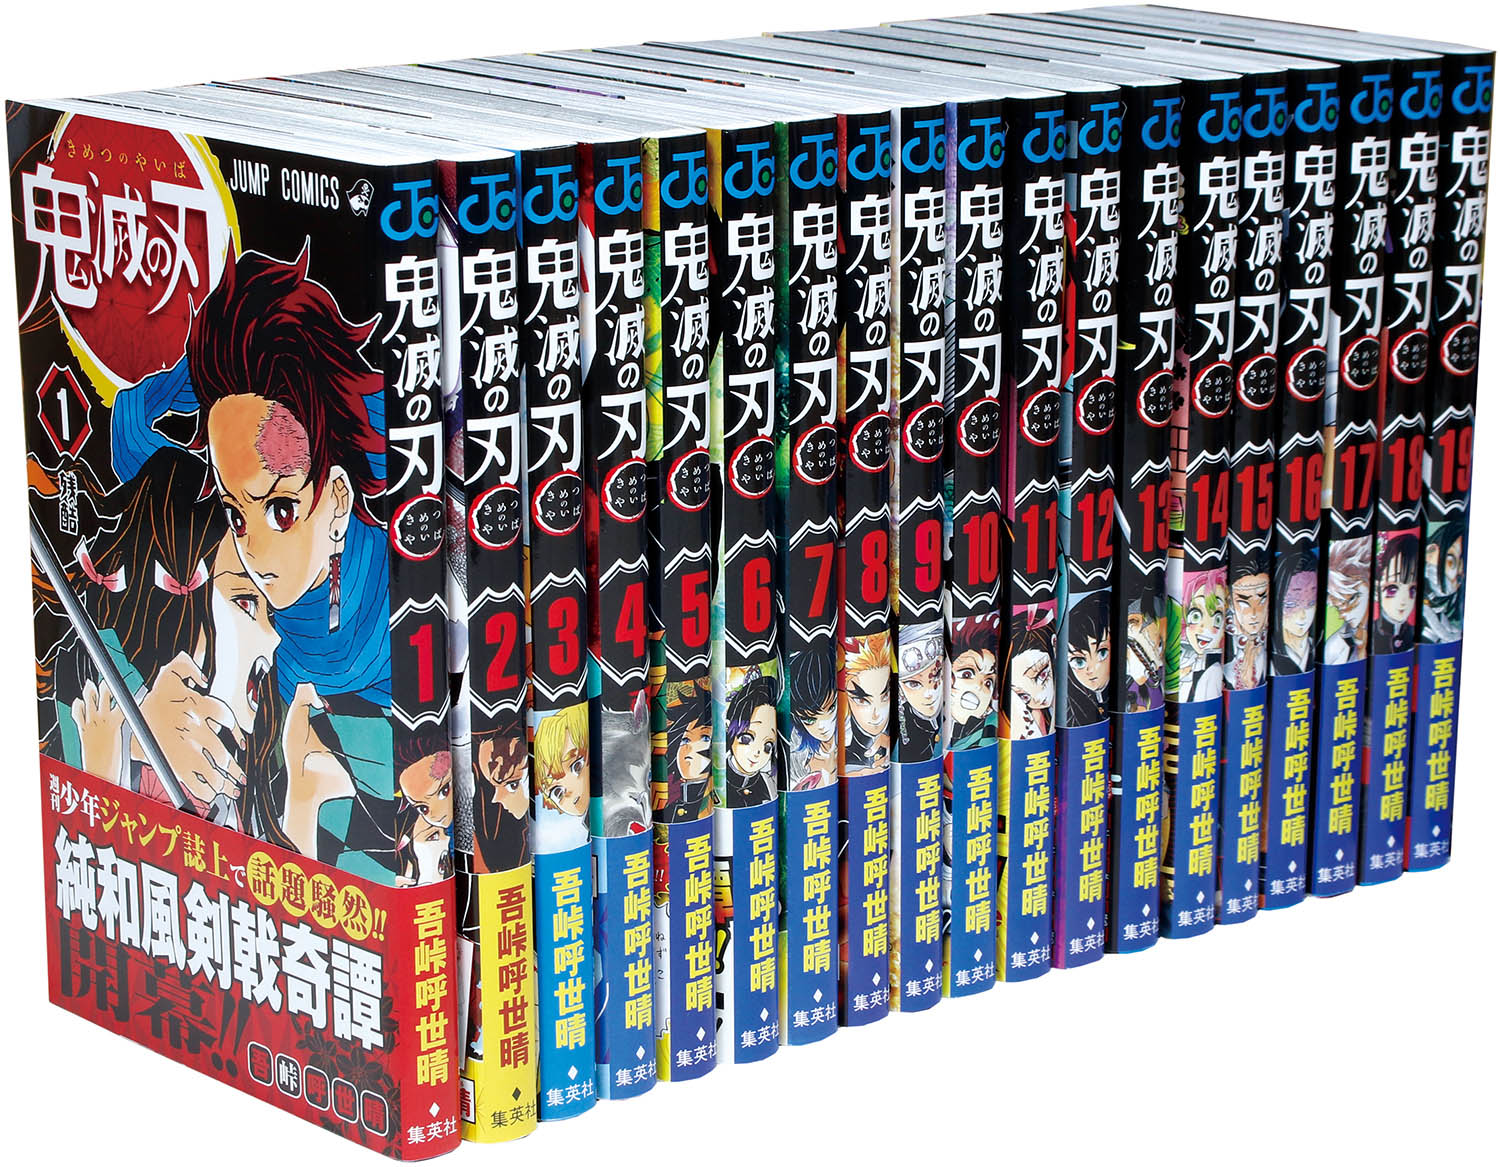 19 volumes of Demon Slayer: Kimetsu no Yaiba lined up.